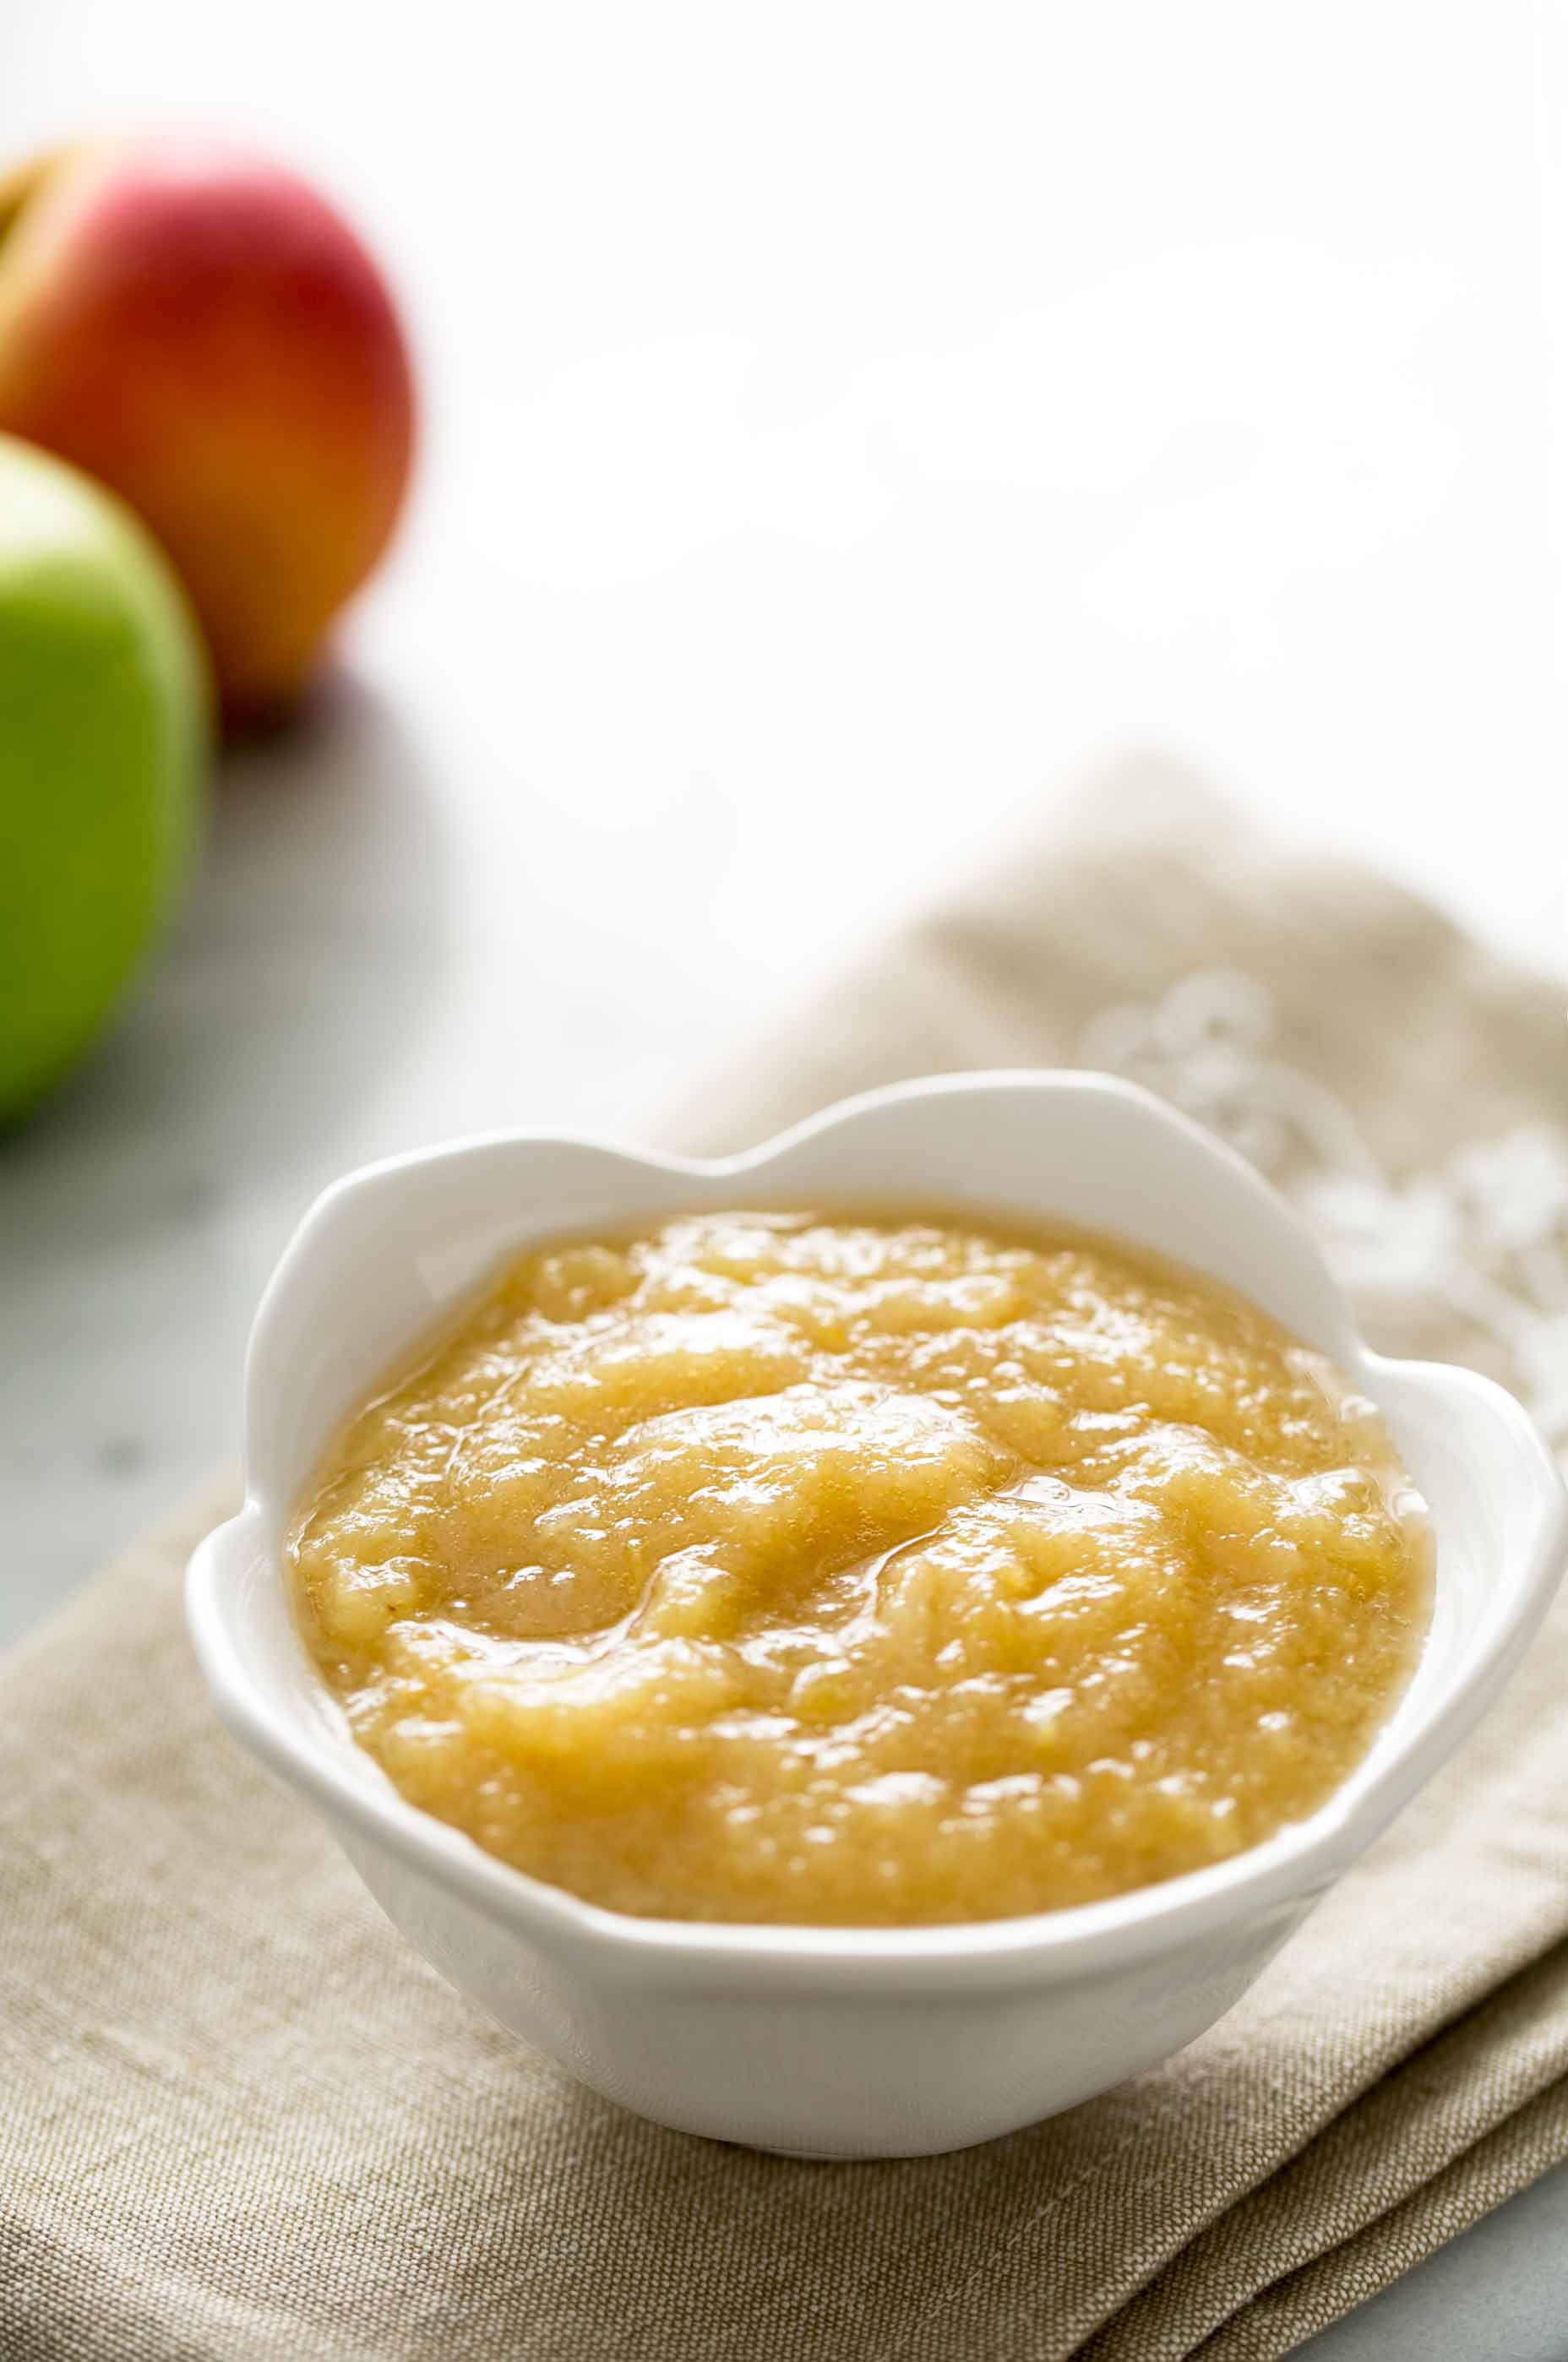 Healthy Recipes Using Applesauce
 Homemade Applesauce